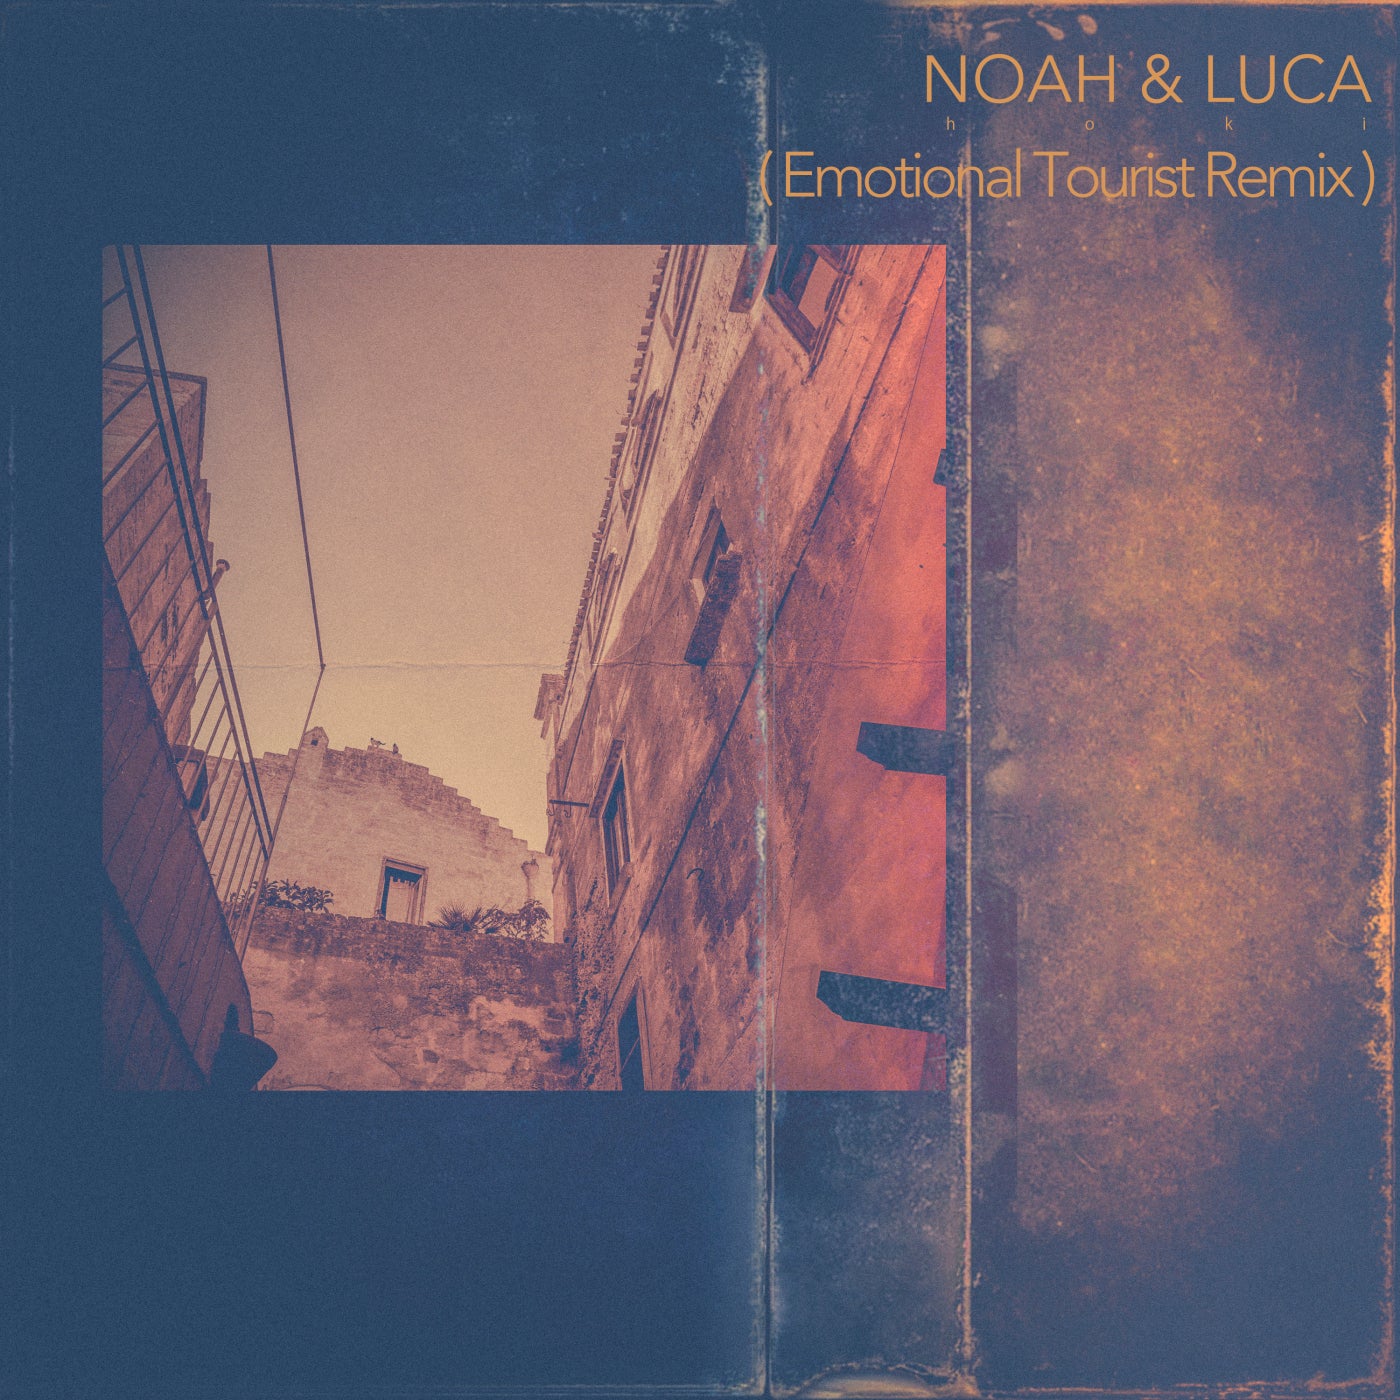 Noah & Luca (Emotional Tourist Remix)